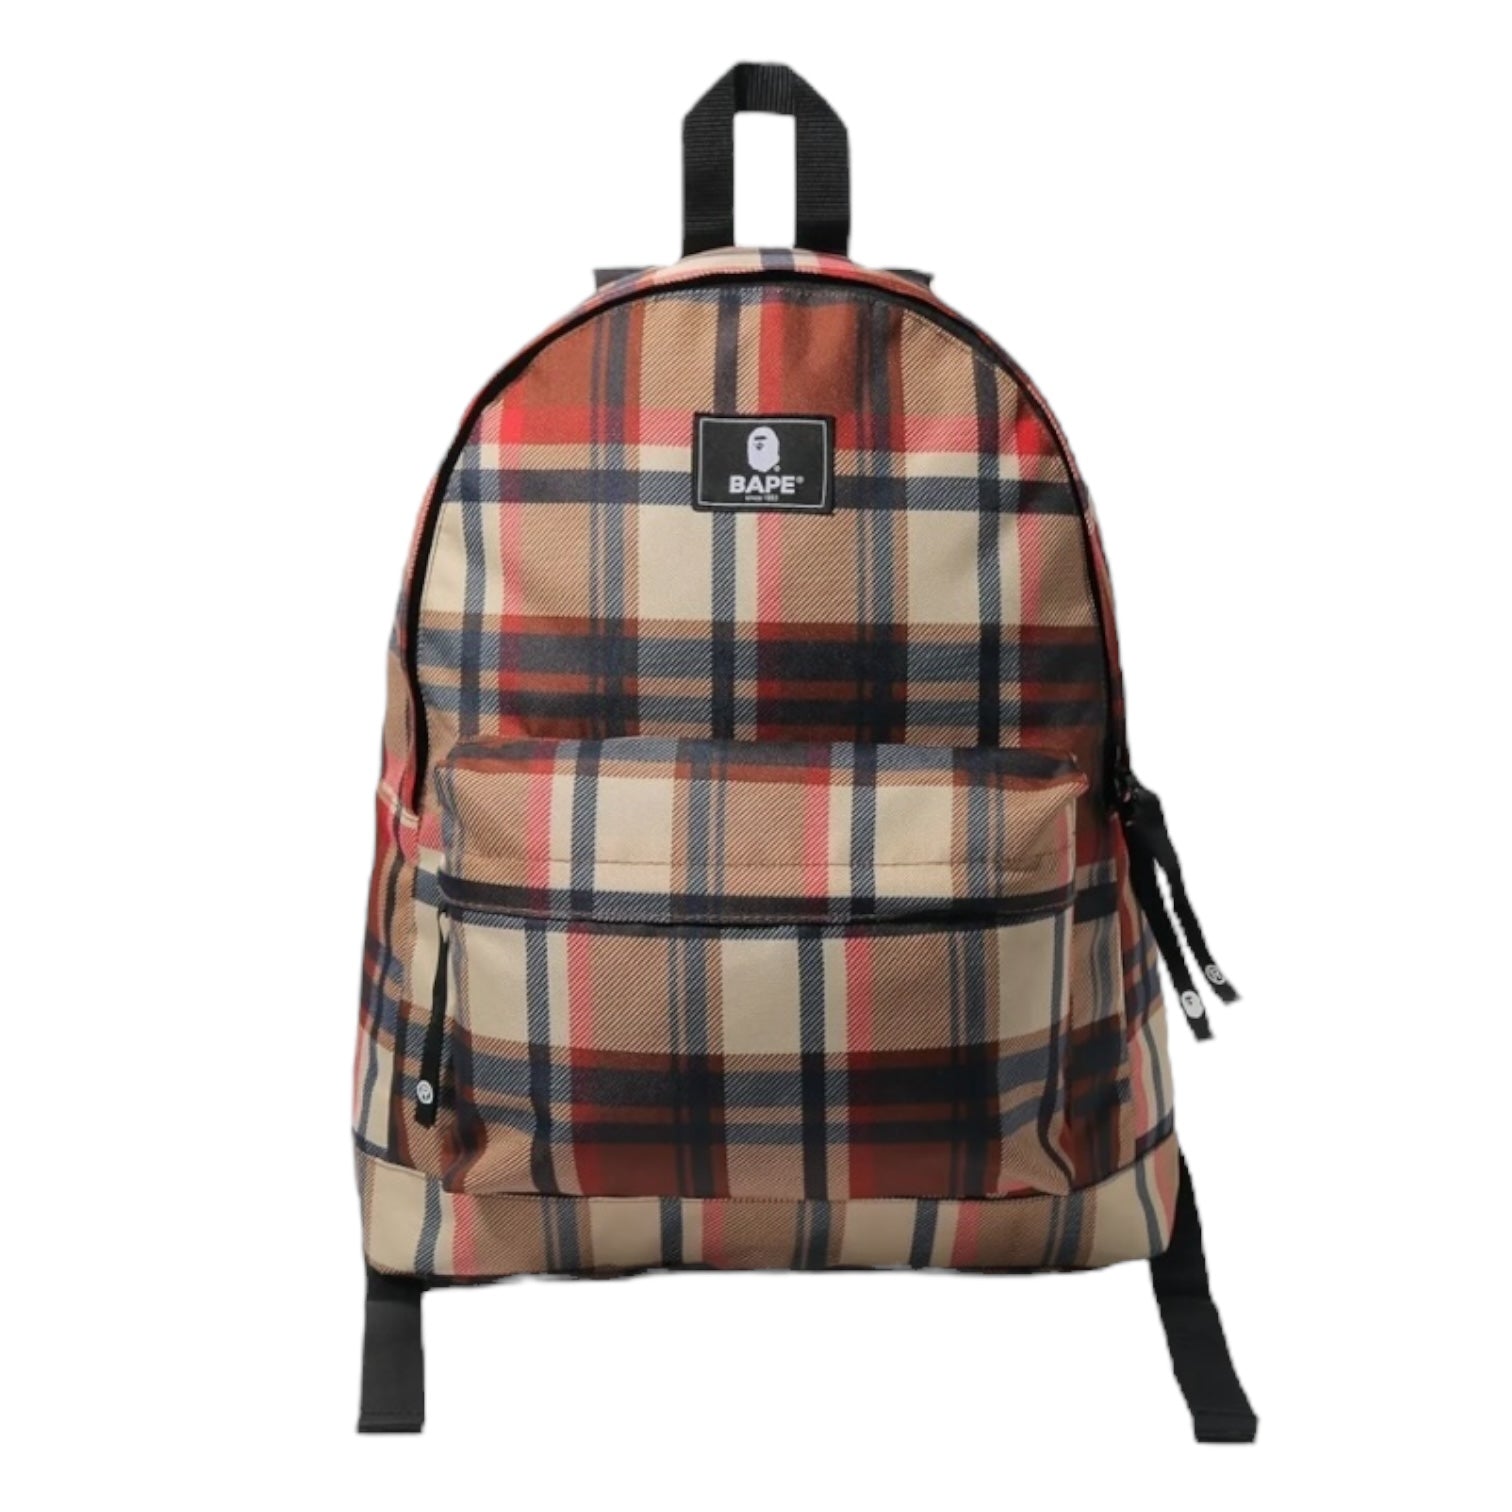 BAPE Plaid Backpack